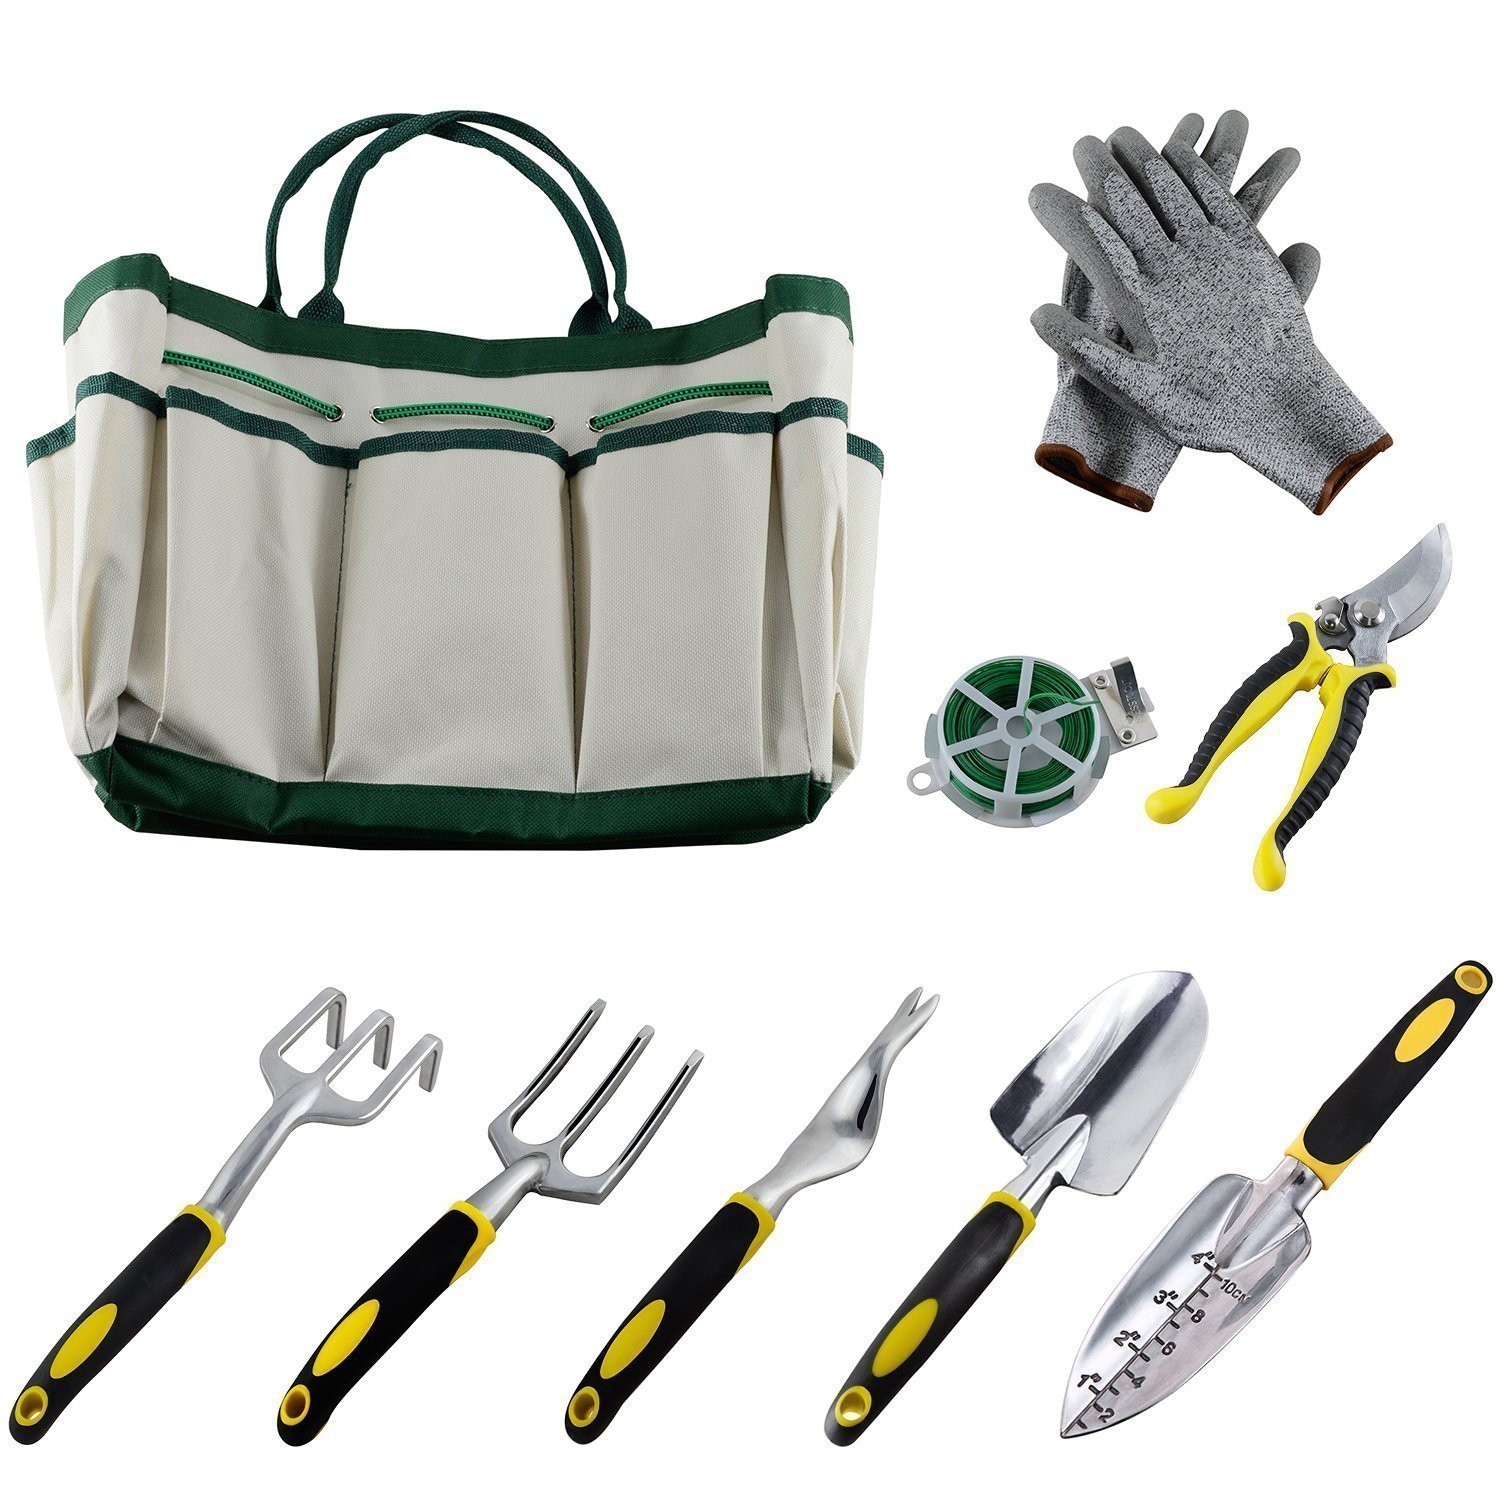 JDM 9Pcs Garden Tool Sets-a Plant Rope,Soft Gloves,6 Ergonomic ...